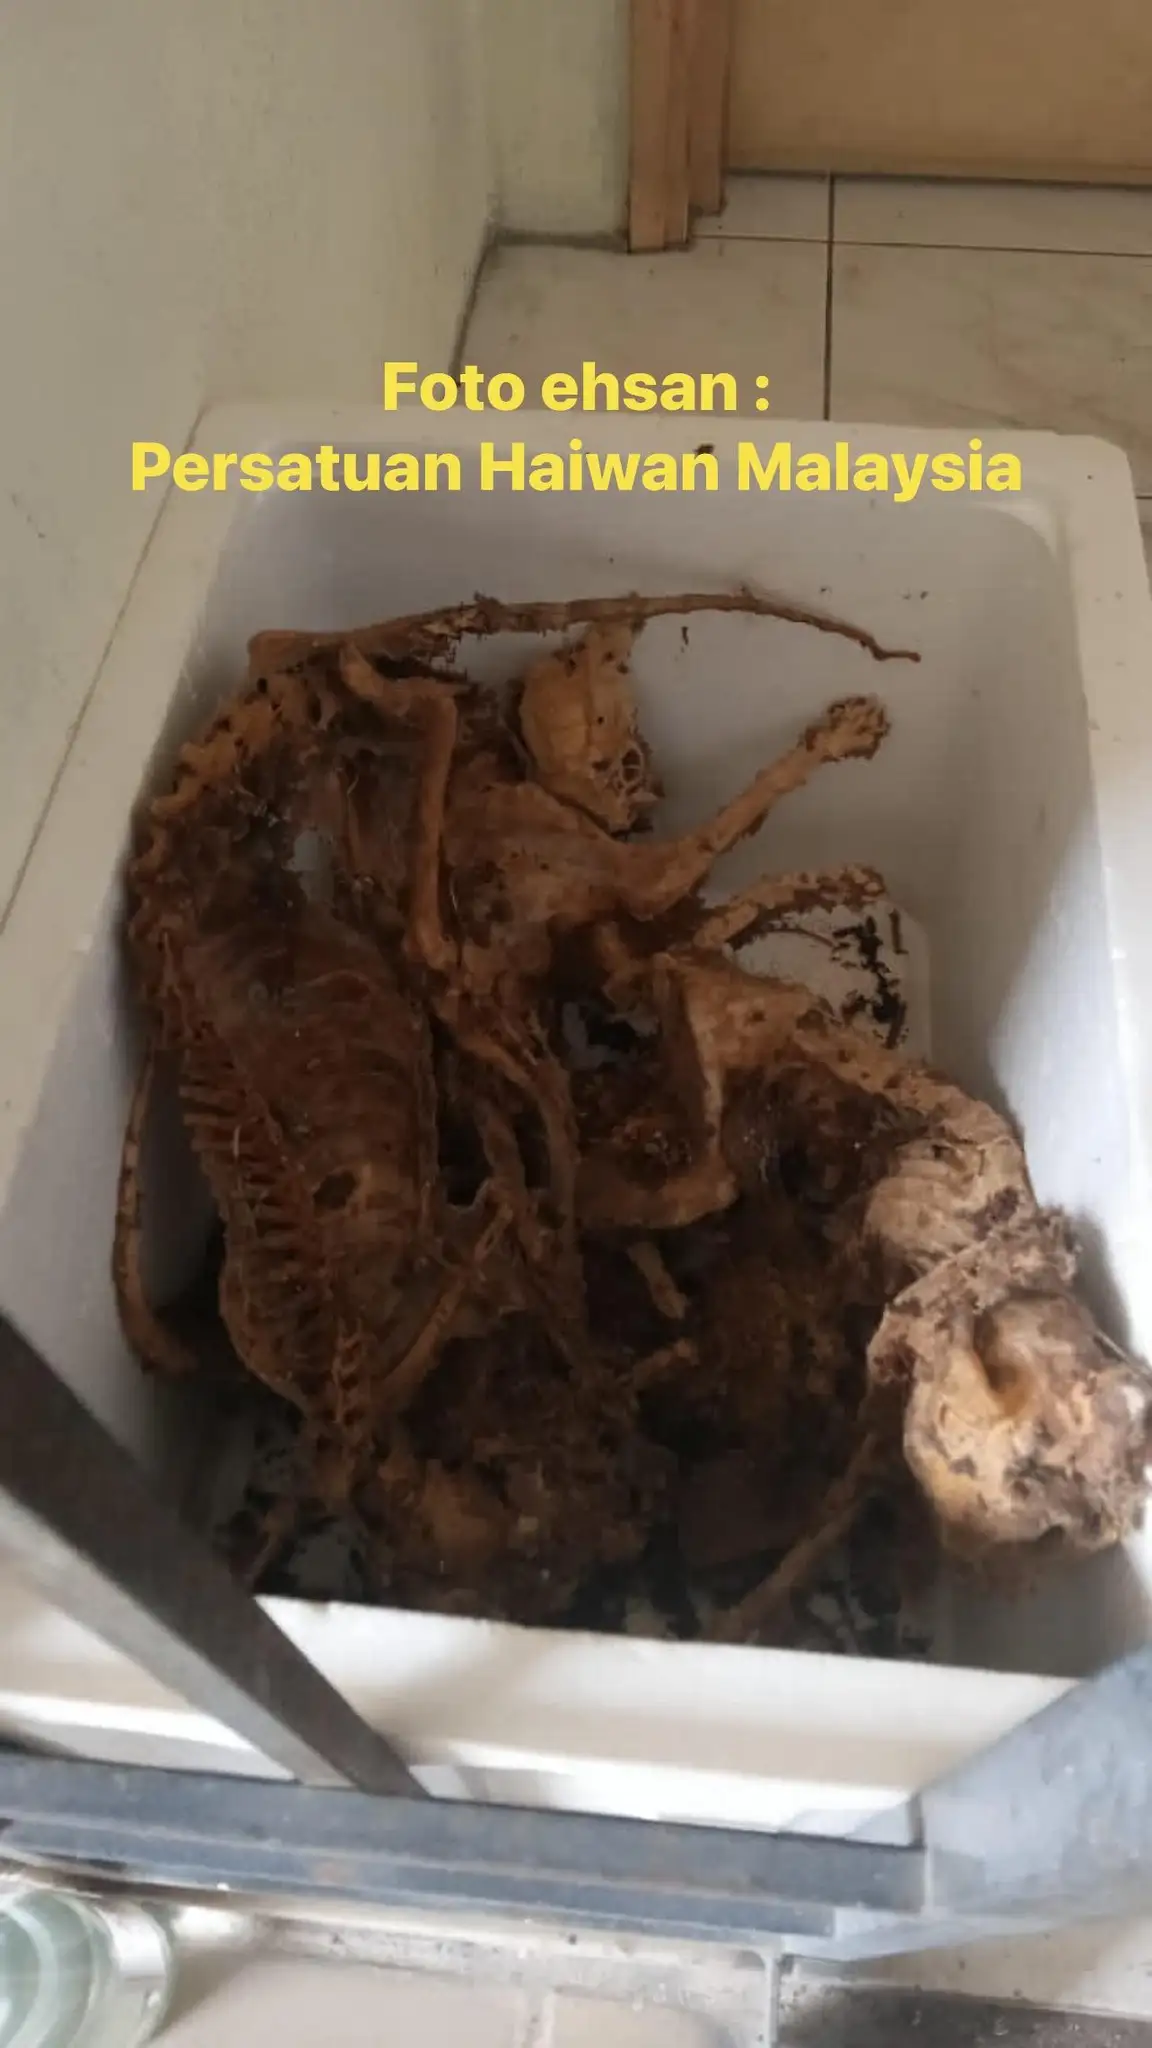 Cat carcasses at a condo unit in cheras